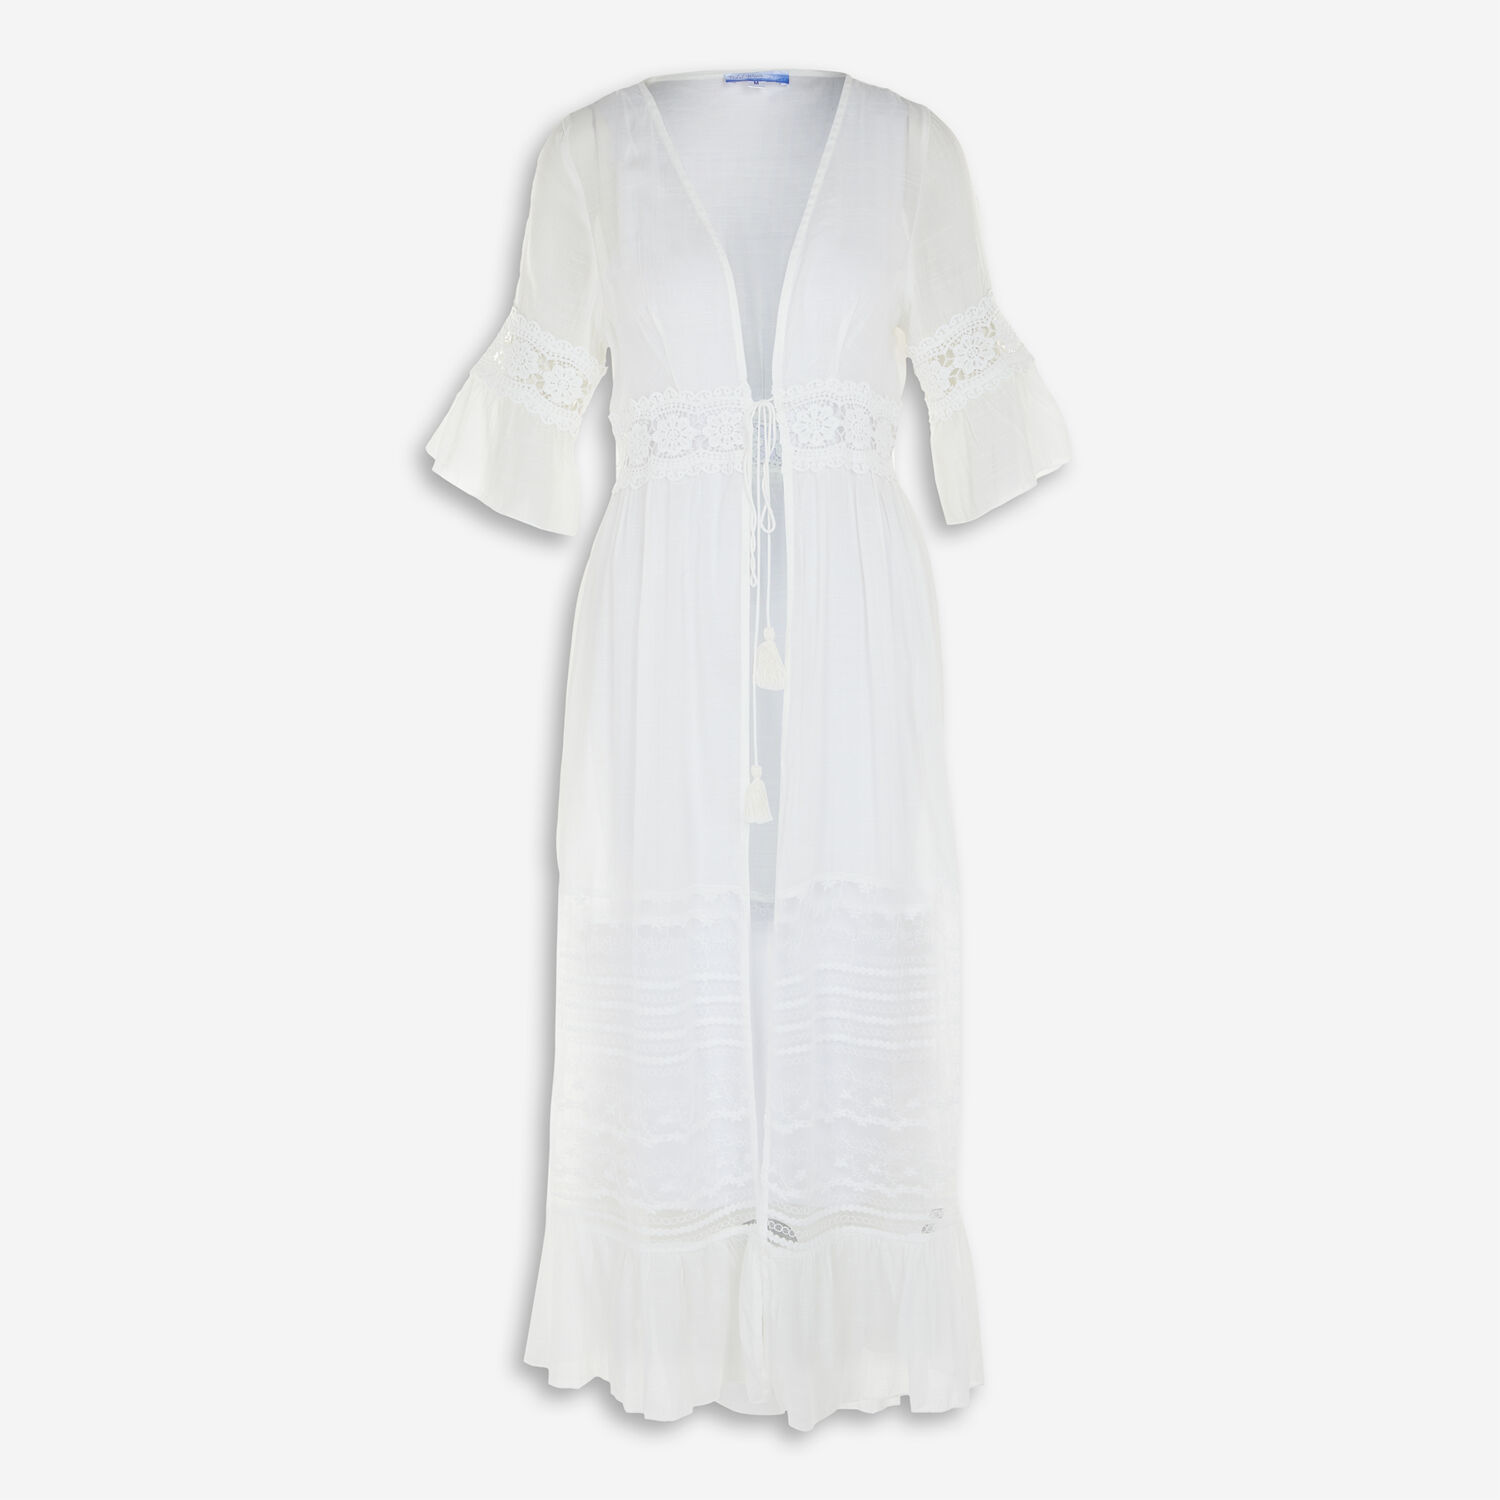 Белая длинная пляжная одежда с кружевным дизайном Tidal Wave Beachwear